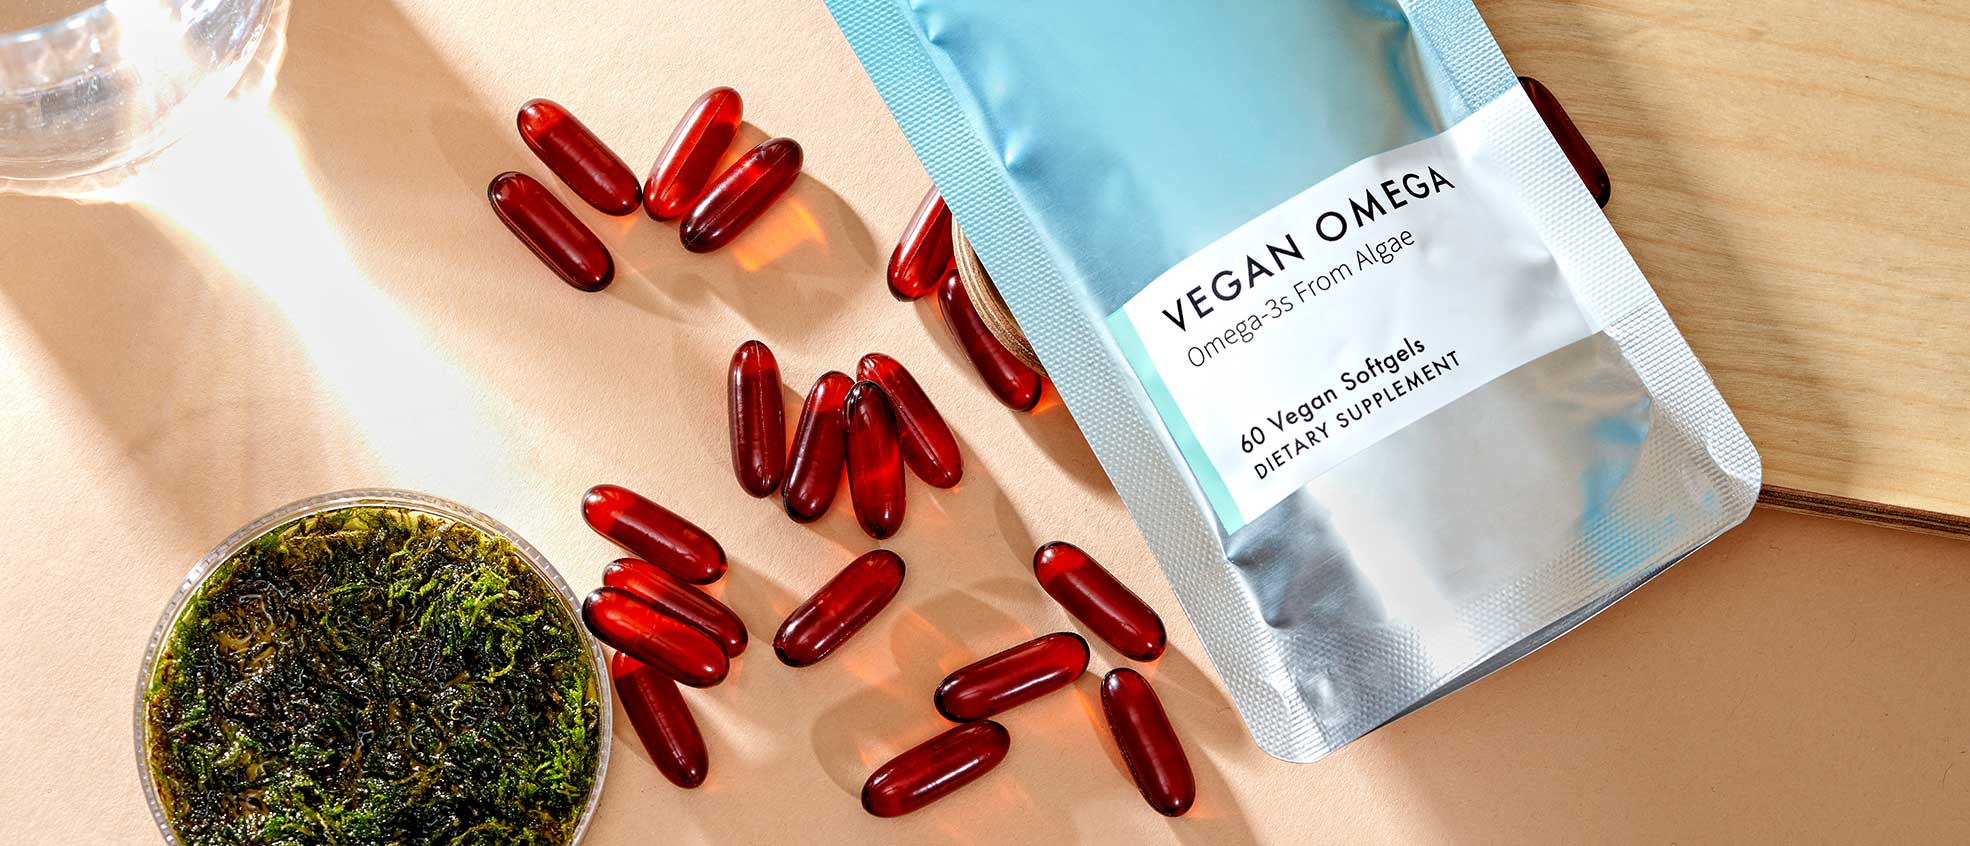 picture of vegan omega sachet next to red soft gels and petri dish marine algae. 